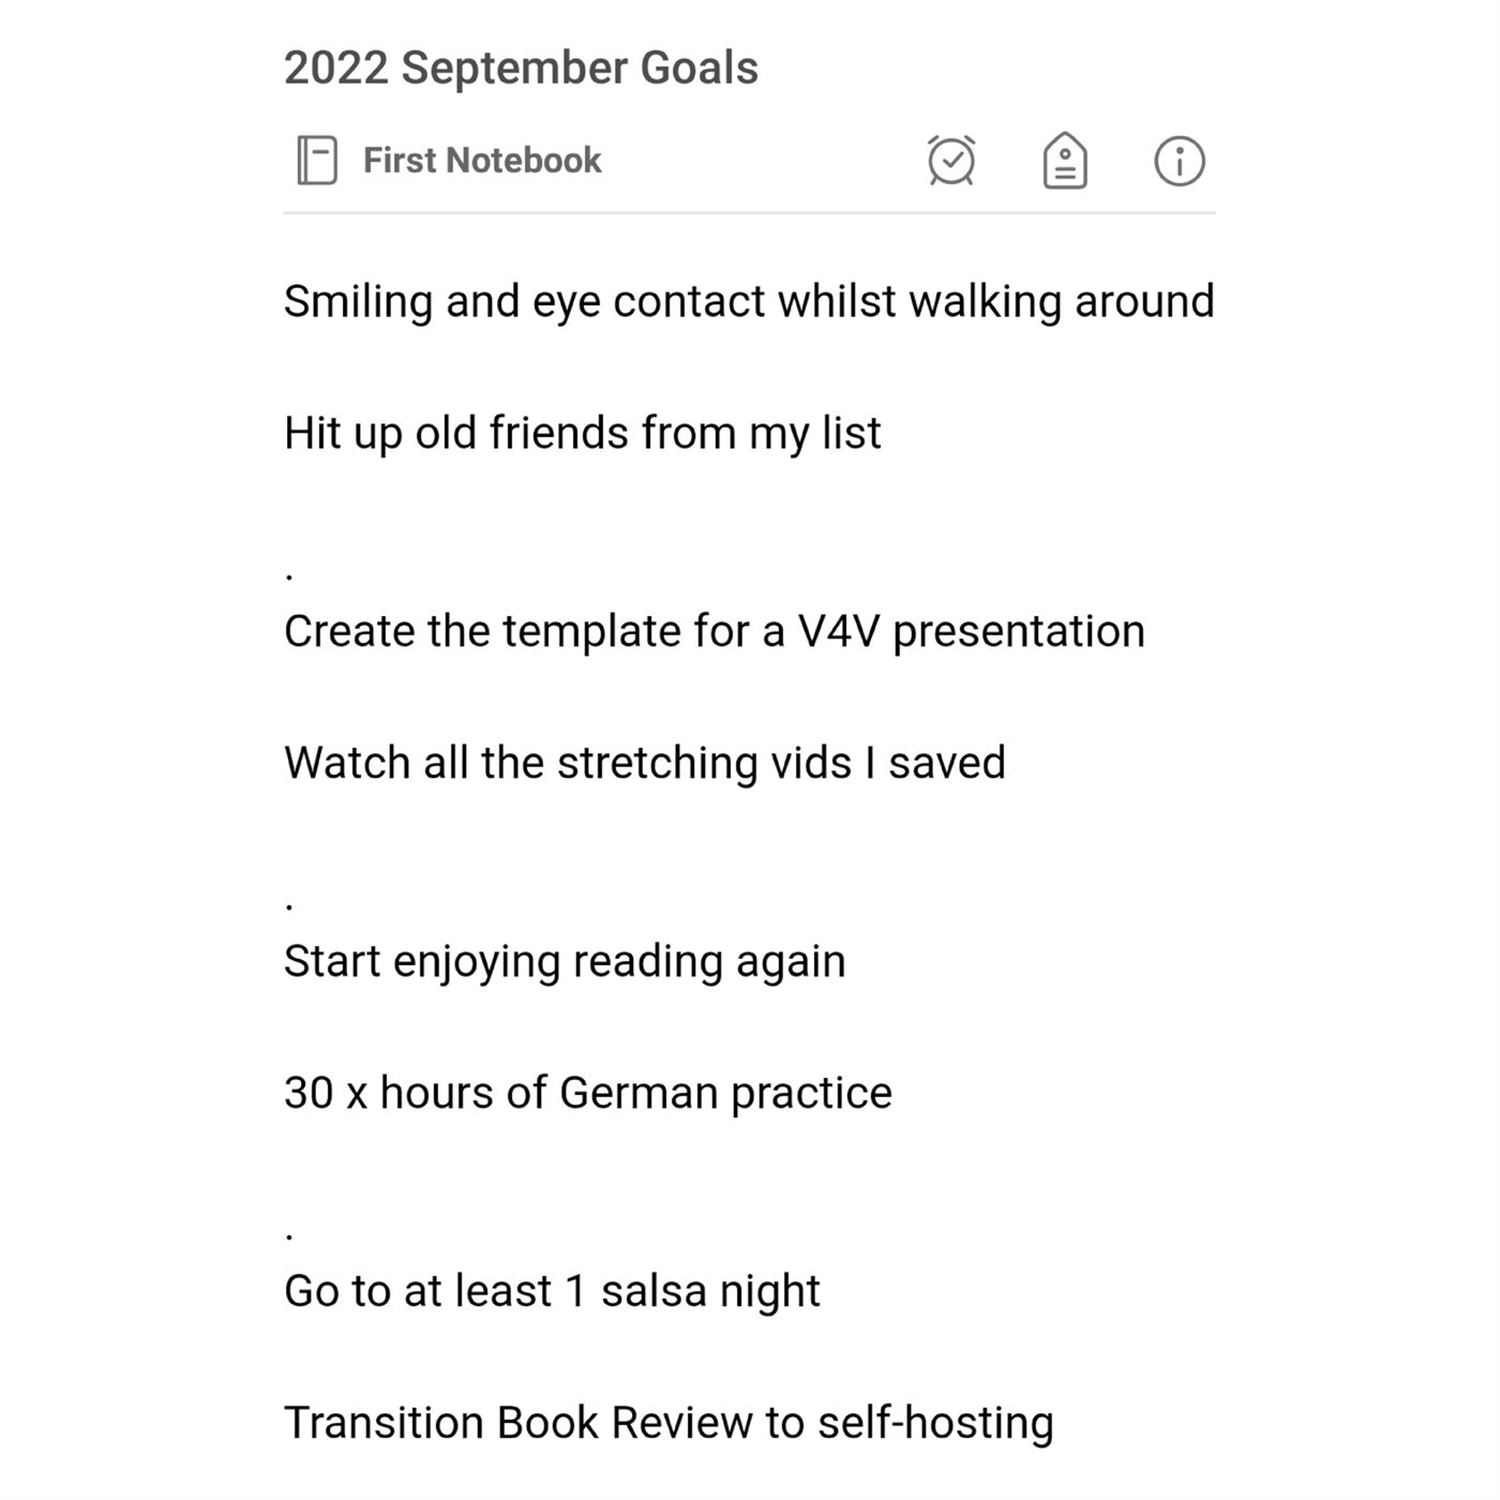 Kyrin's September Goals